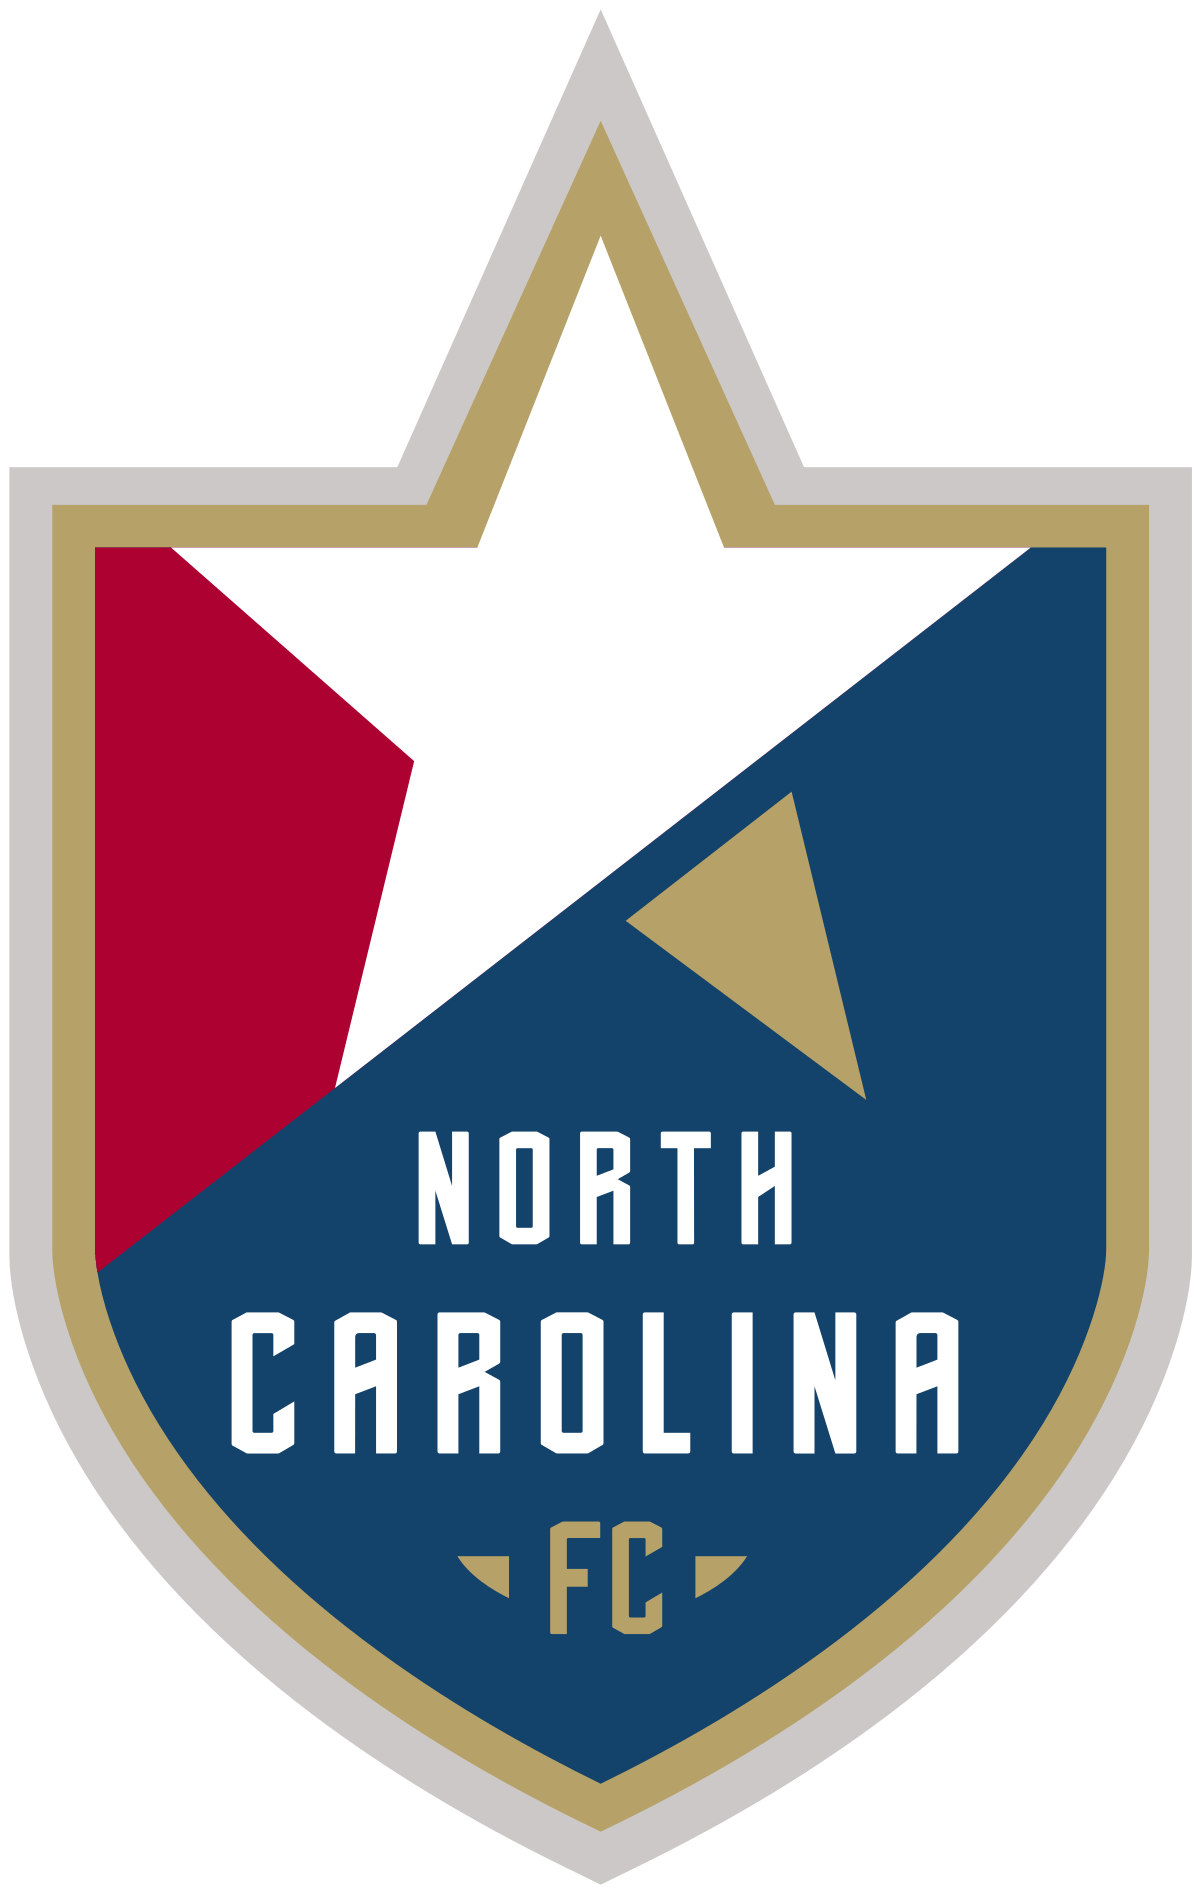 North Carolina Logo - North Carolina FC